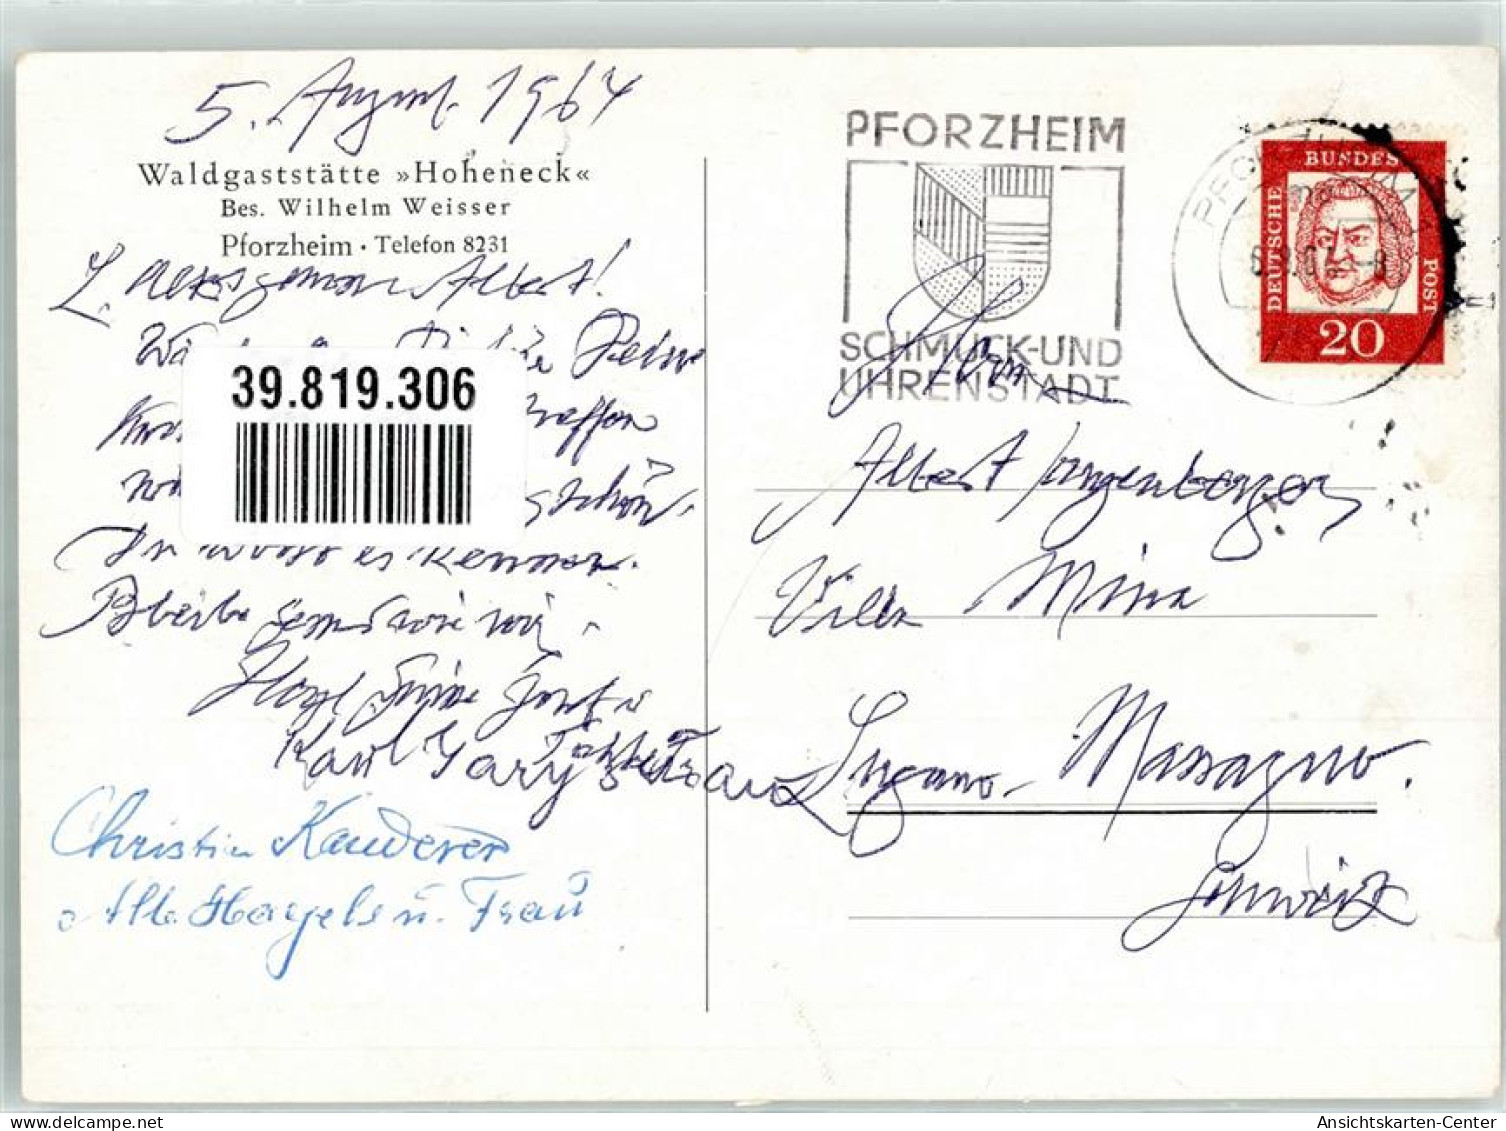 39819306 - Pforzheim - Pforzheim